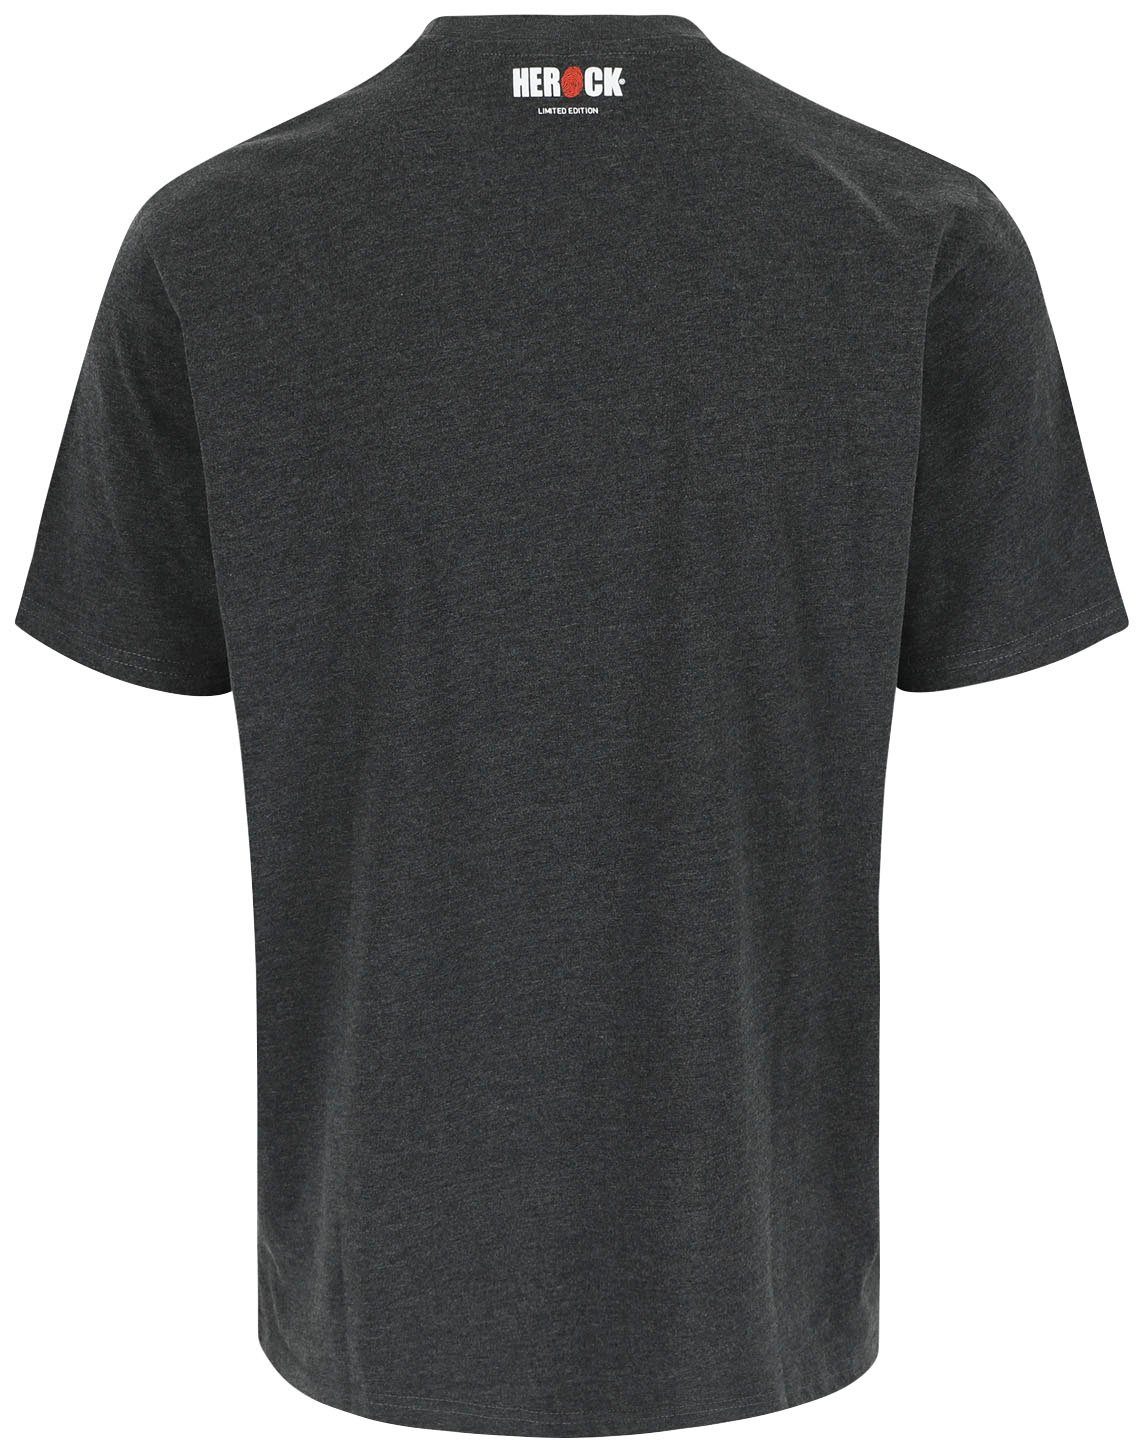 Maximus Edition Herock Limited T-Shirt